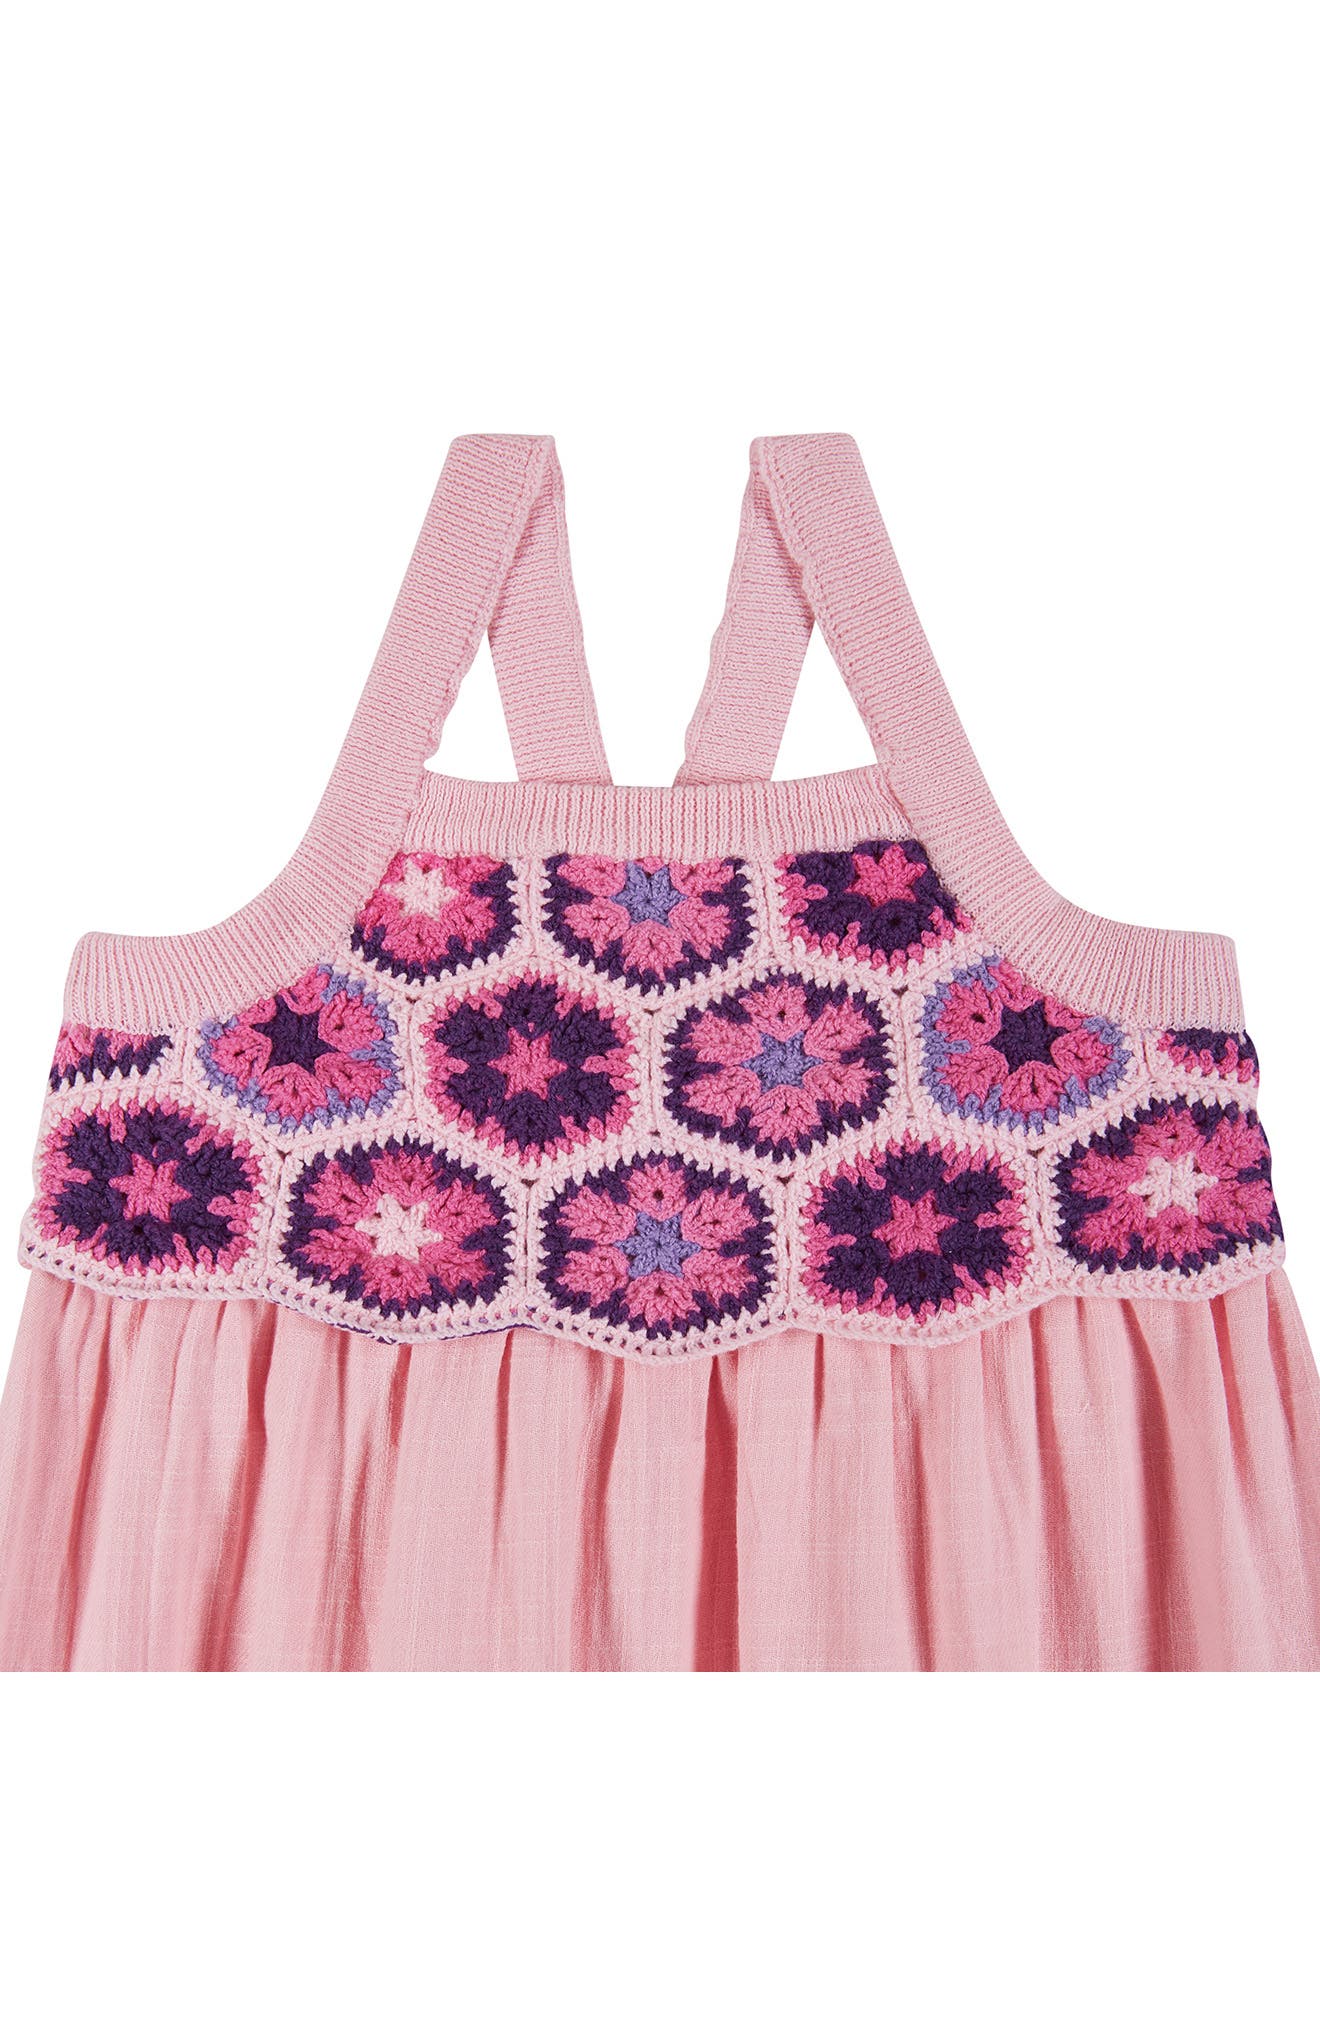 Andy & Evan Kids' Crochet Bodice Dress, Alternate, color, Pink Crochet